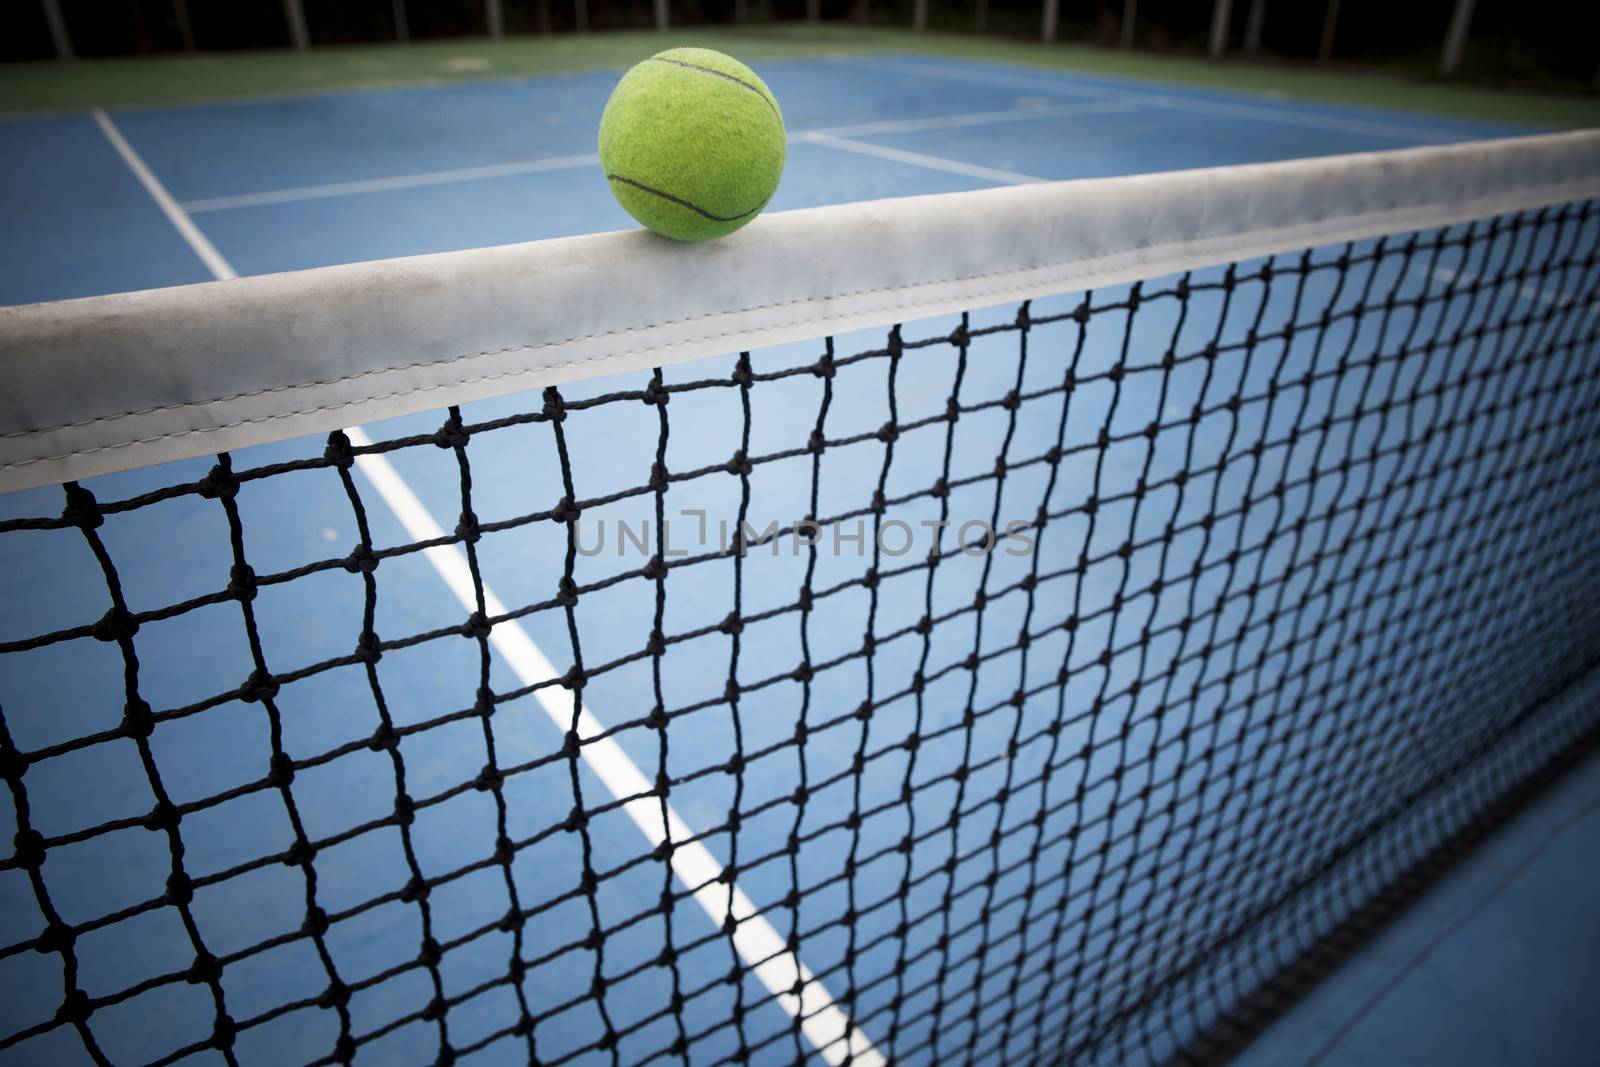 tennes ball over black net  by khunaspix